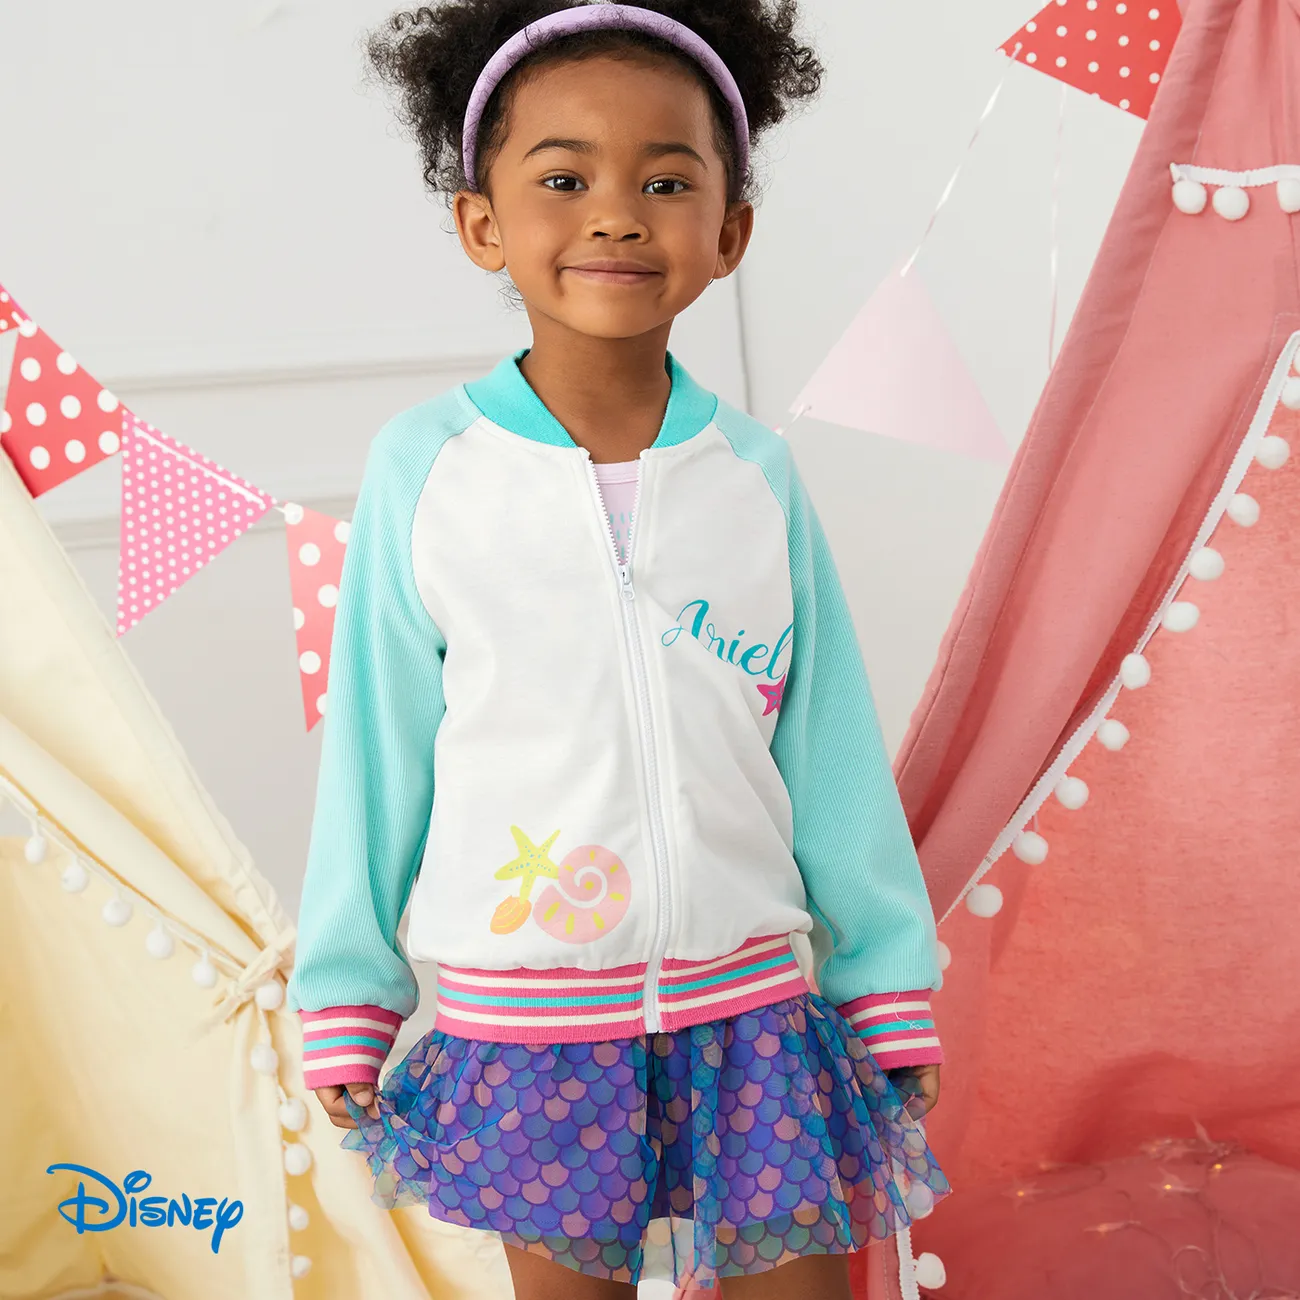 Disney Princess Niño pequeño Chica Cuello levantado Infantil Chaqueta / abrigo Multicolor big image 1